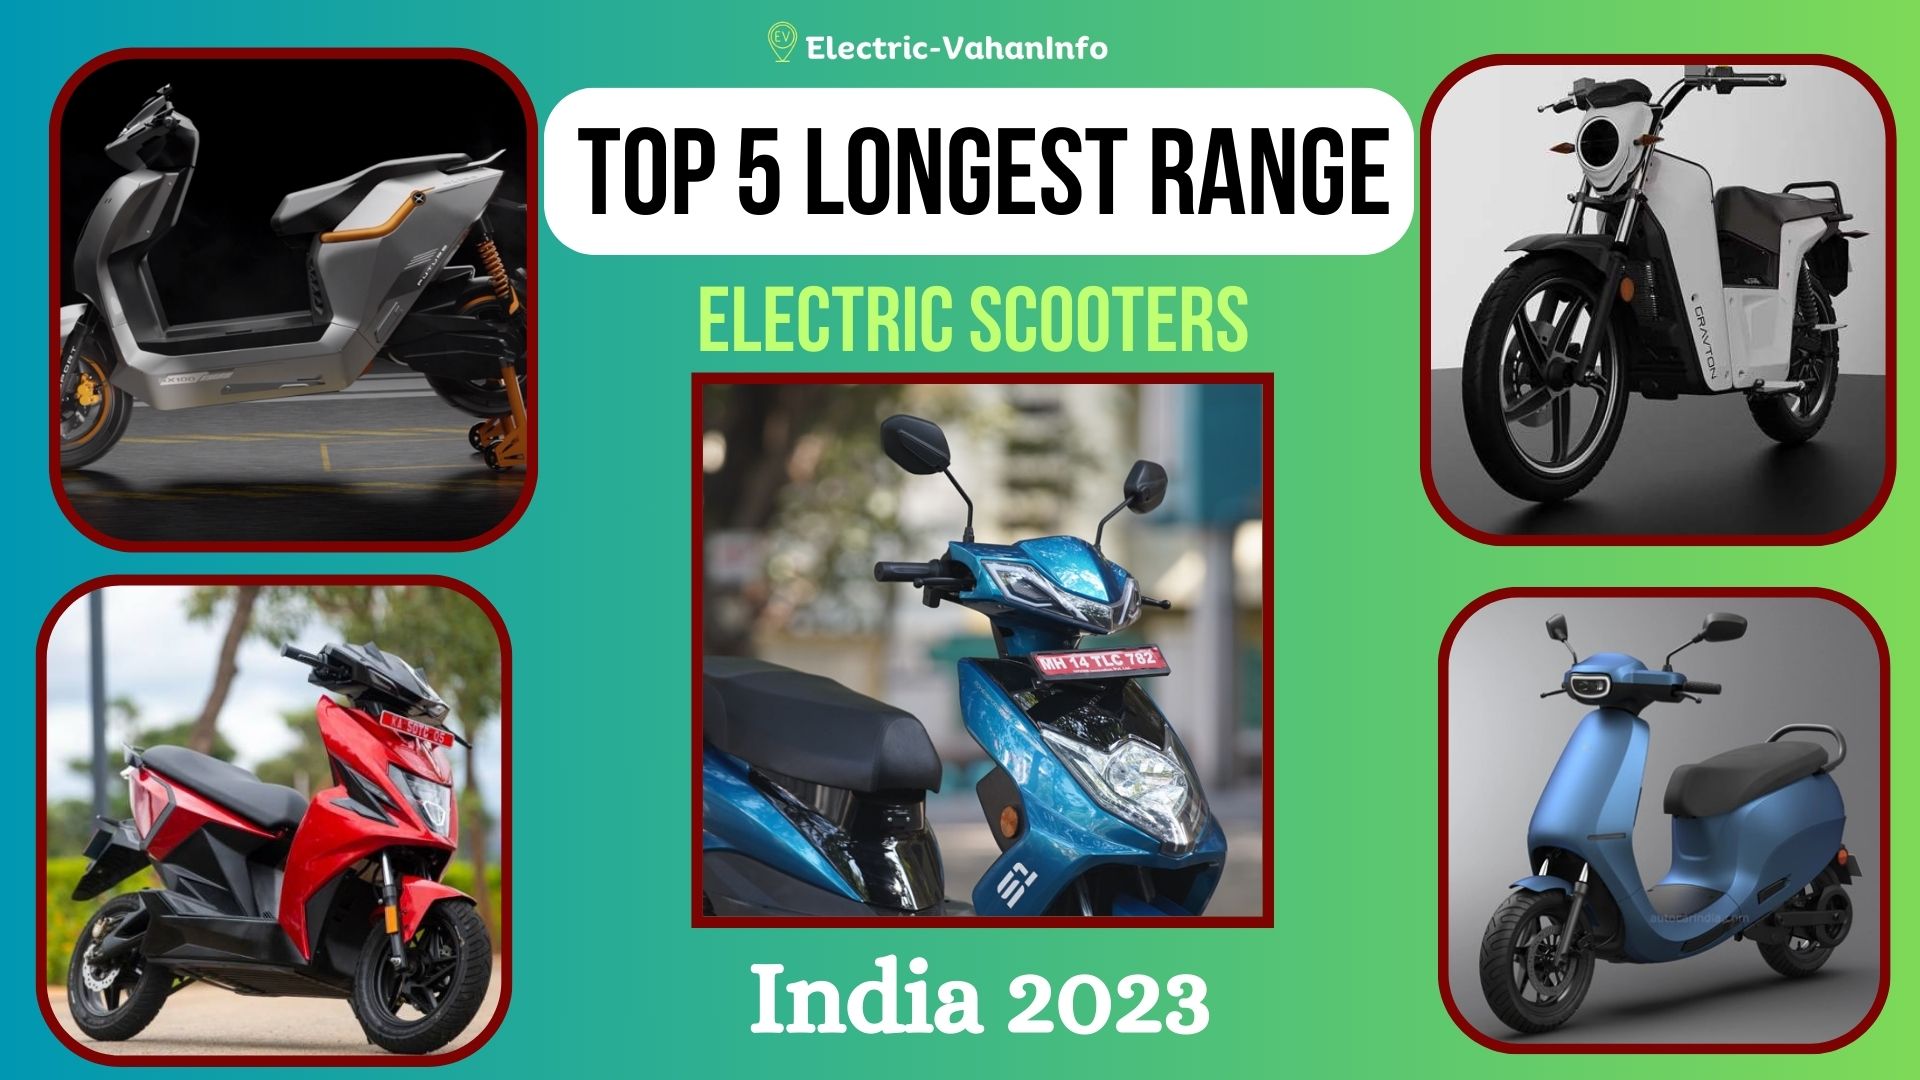 https://electric-vahaninfo.com/top-5-longest-range-electric-scooters-in-india-2023/